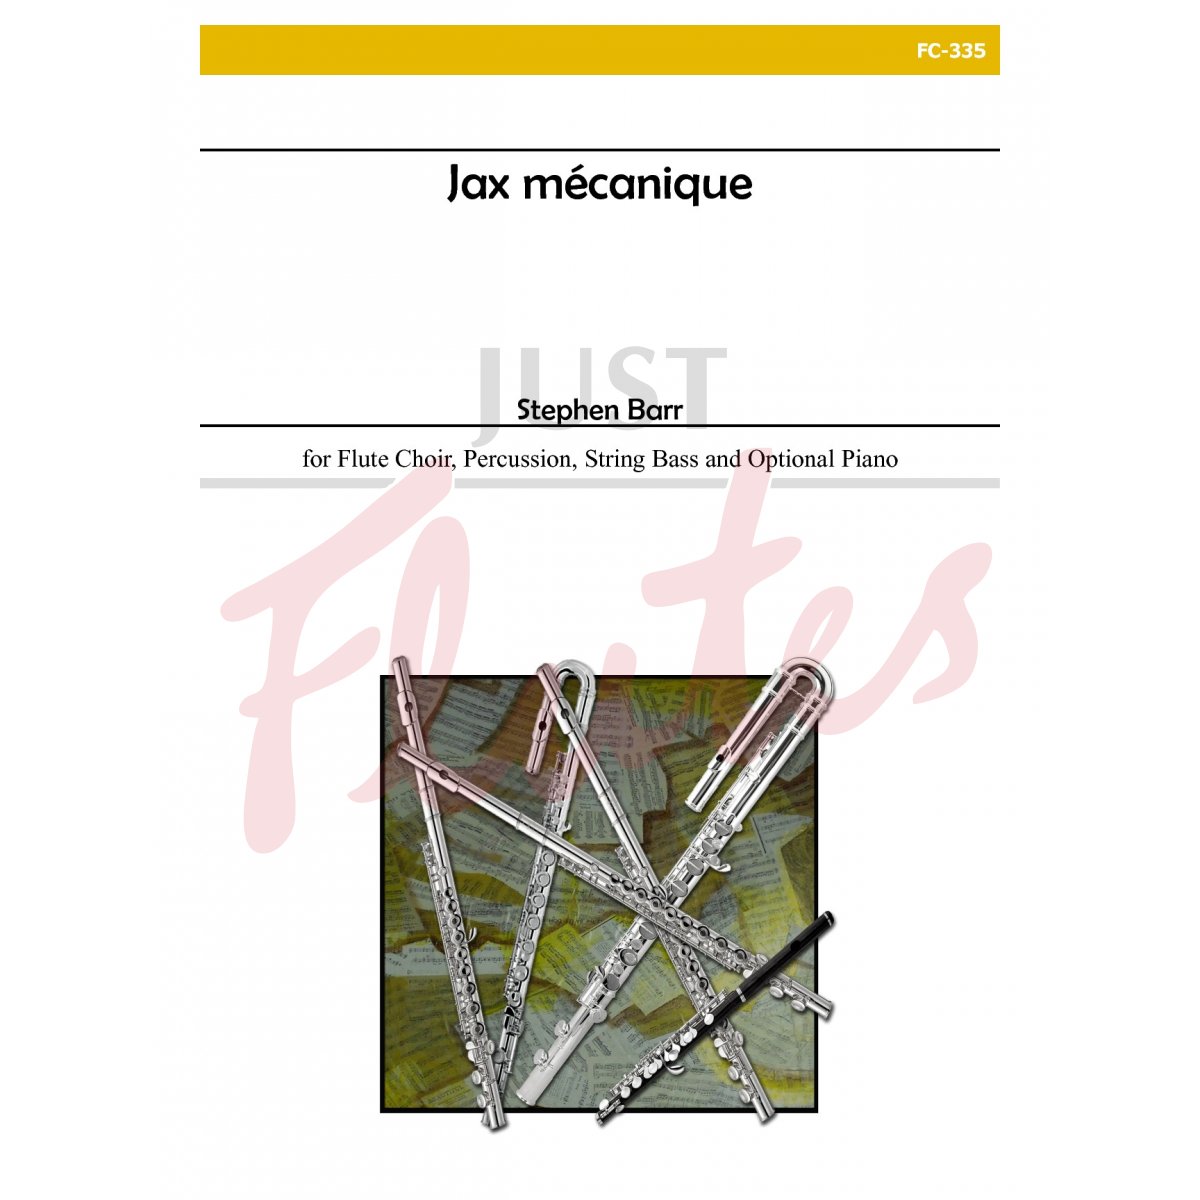 Jax Mecanique for Flute Choir